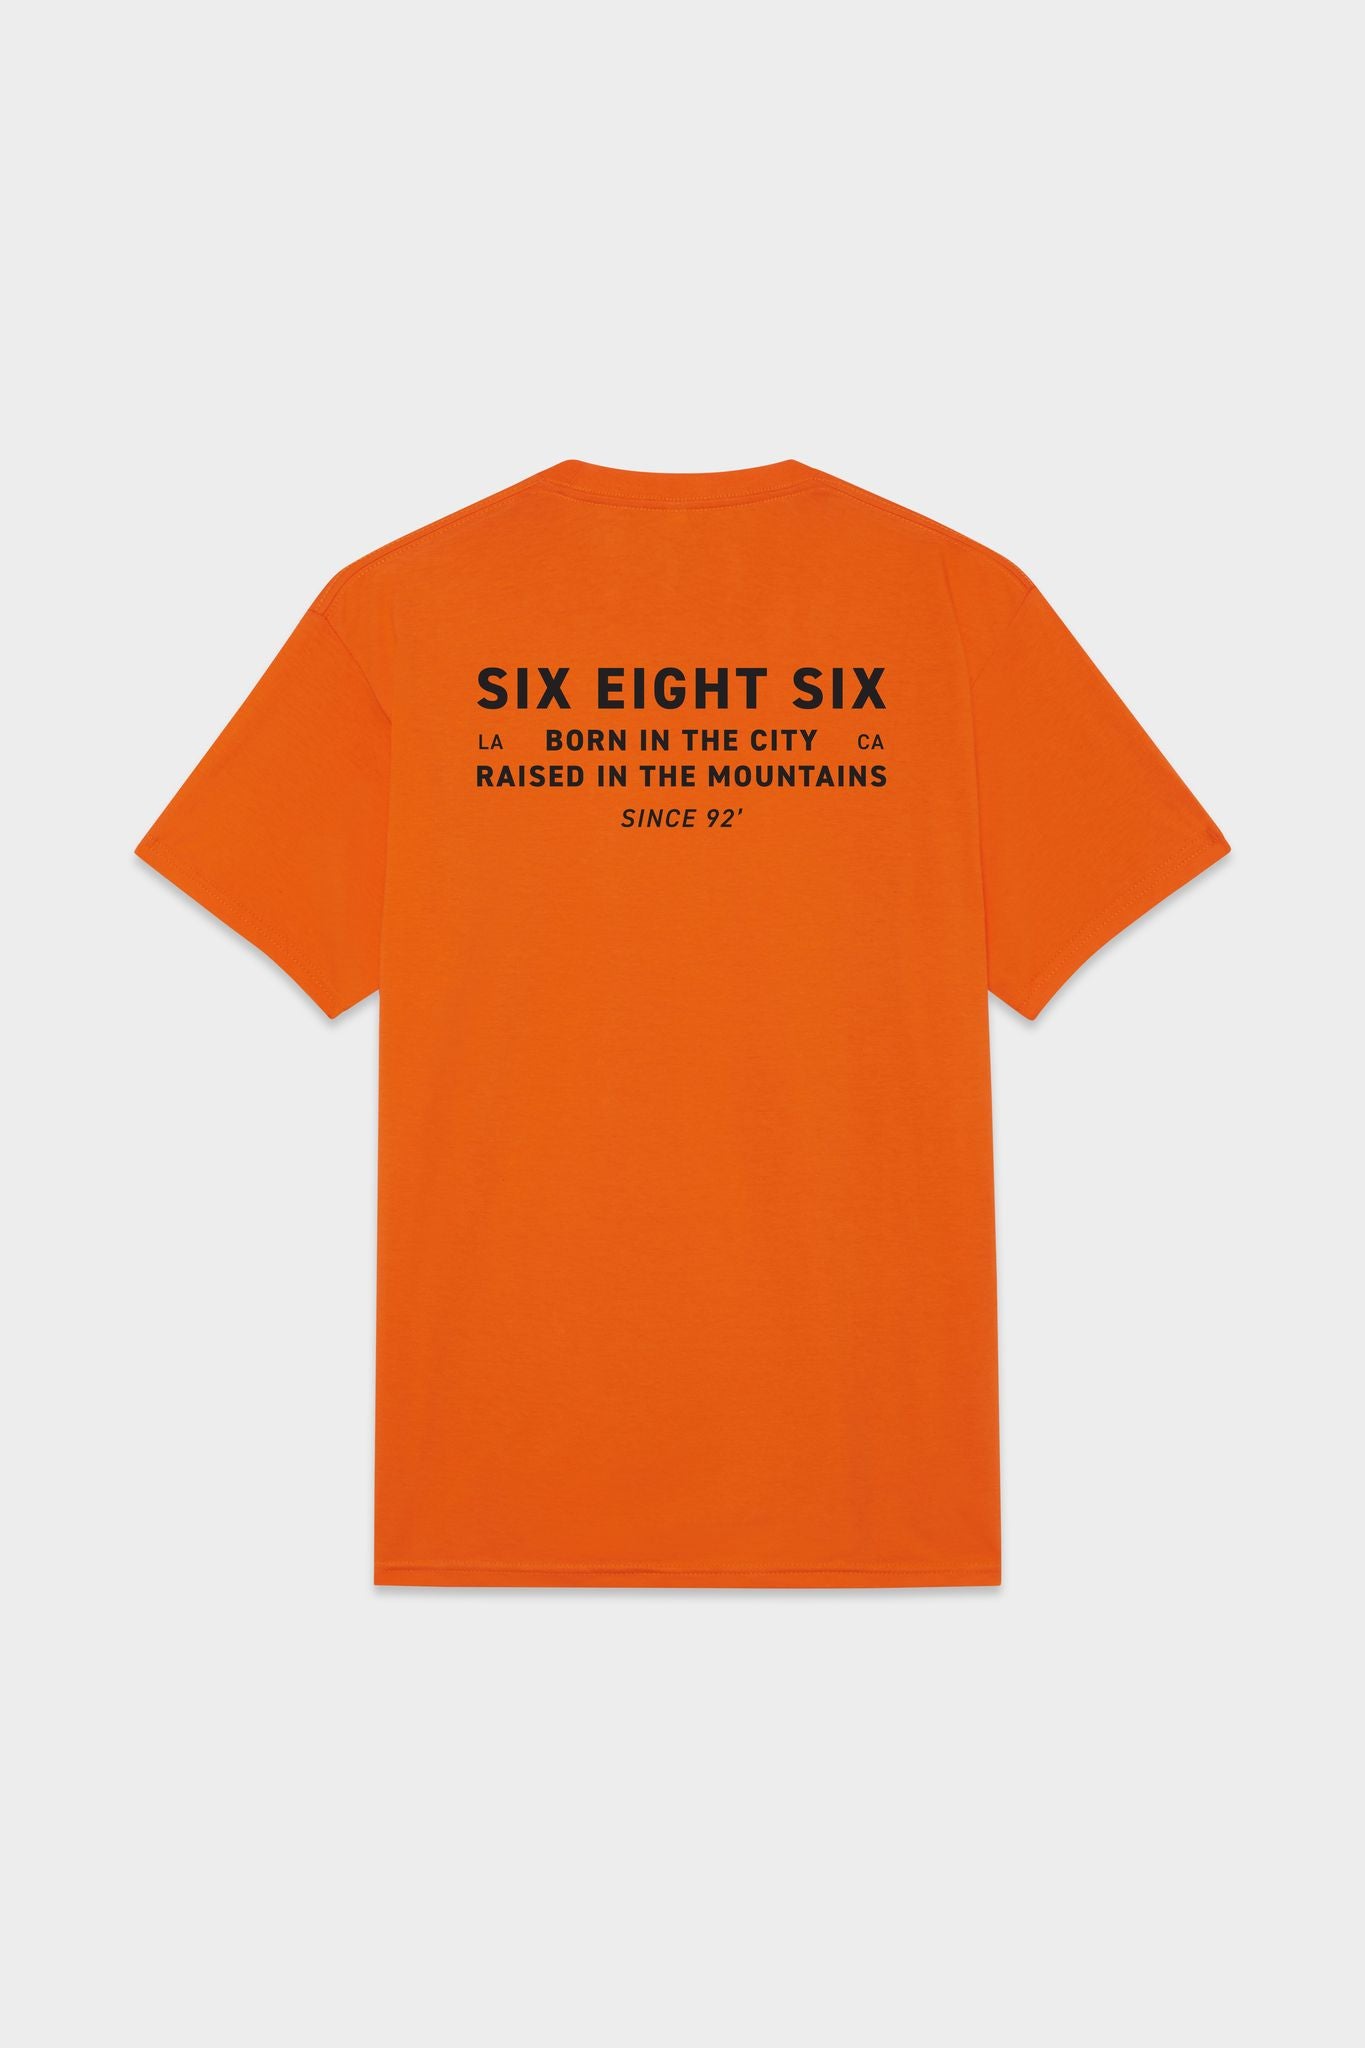 686 - Unwind Premium SS T-Shirt